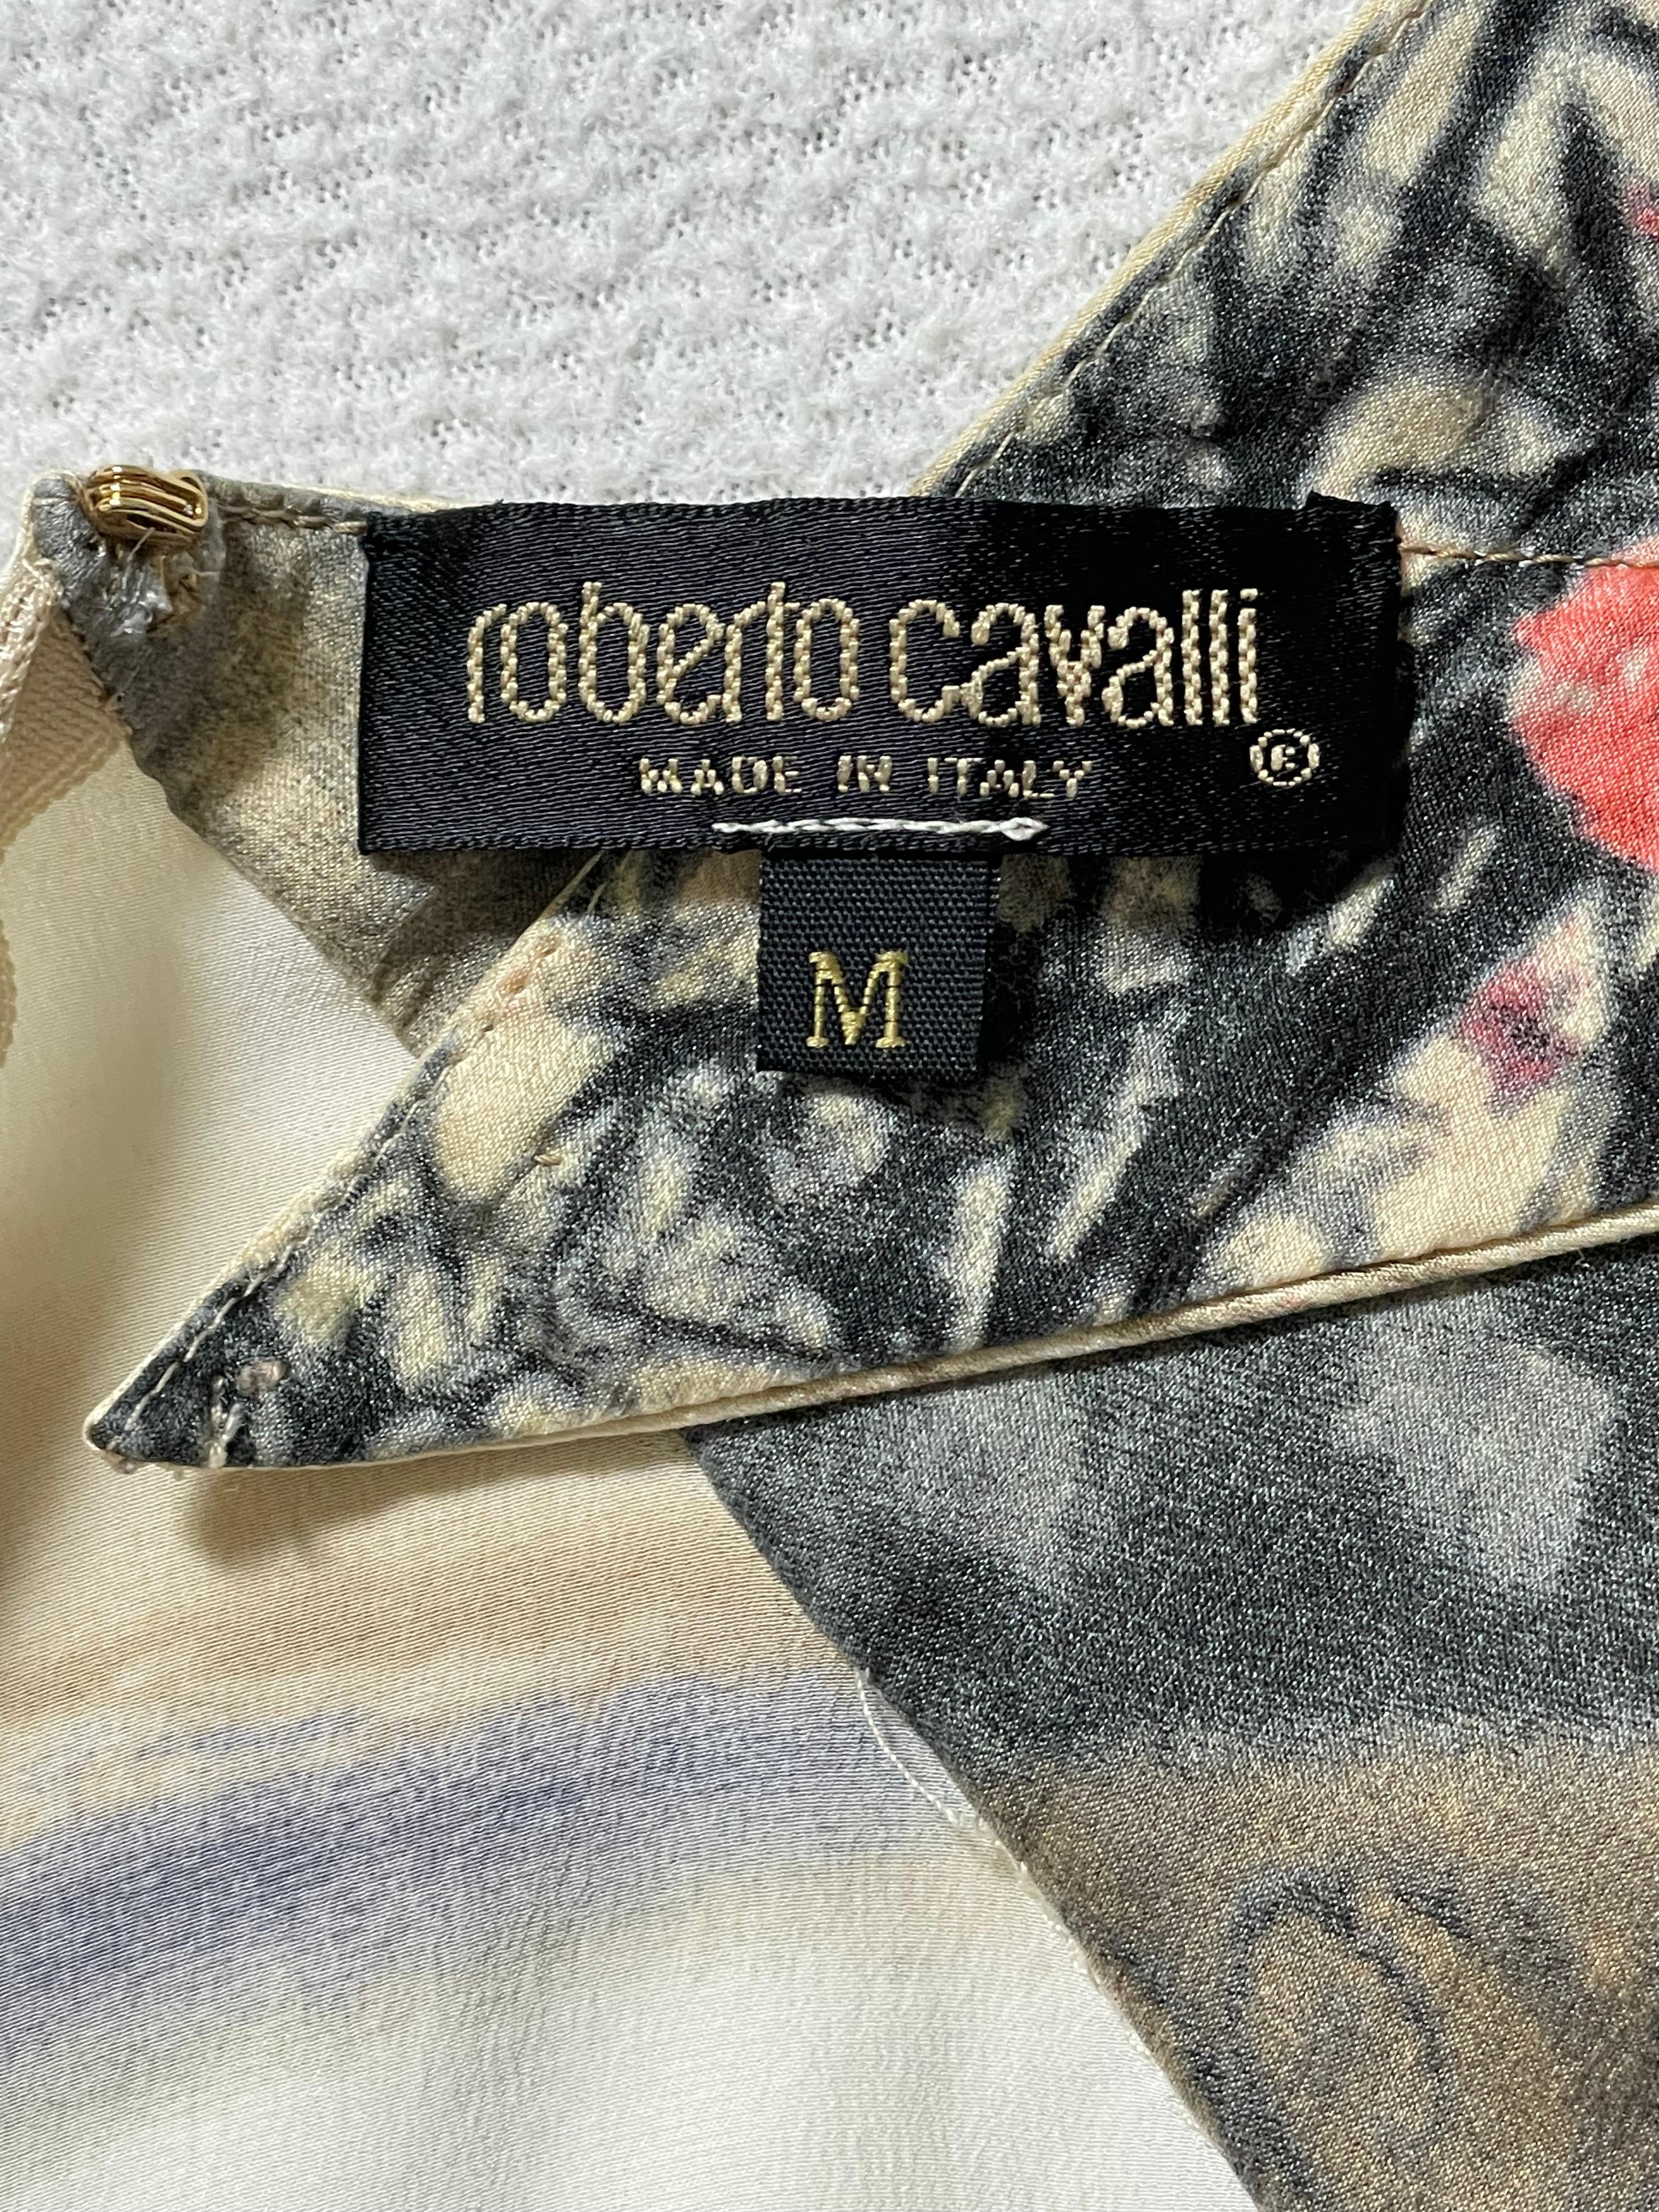 S/S 2004 Roberto Cavalli Runway Cut-Out Silk Mini Dress In Good Condition In Yukon, OK